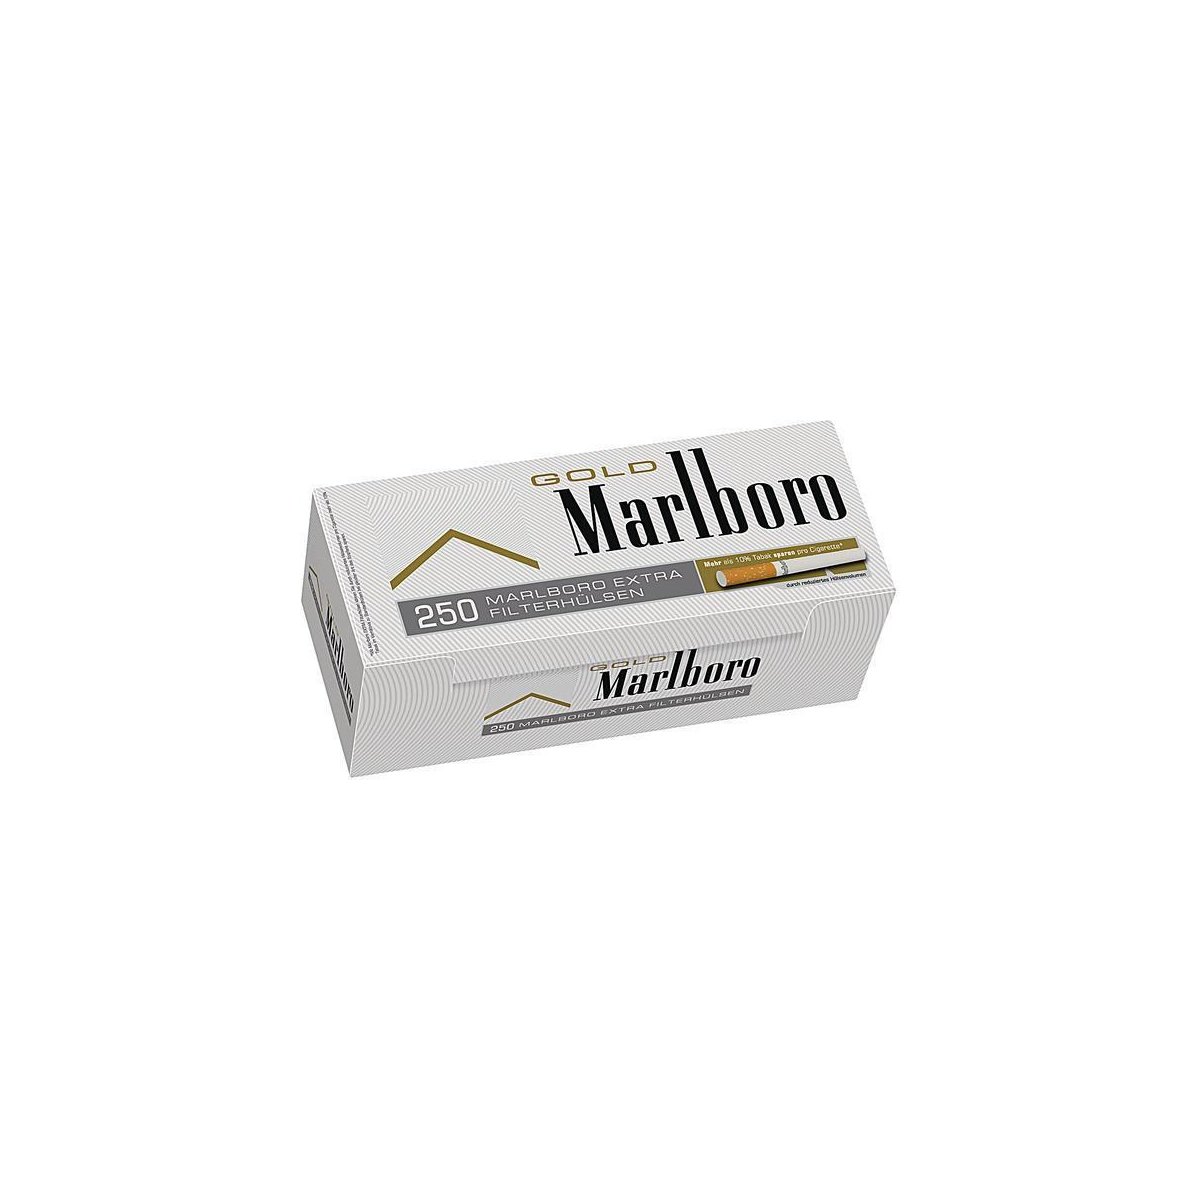 Marlboro Gold Extra Filterhülsen Hülsen Zigarettenhülsen 4x250er Pg. 